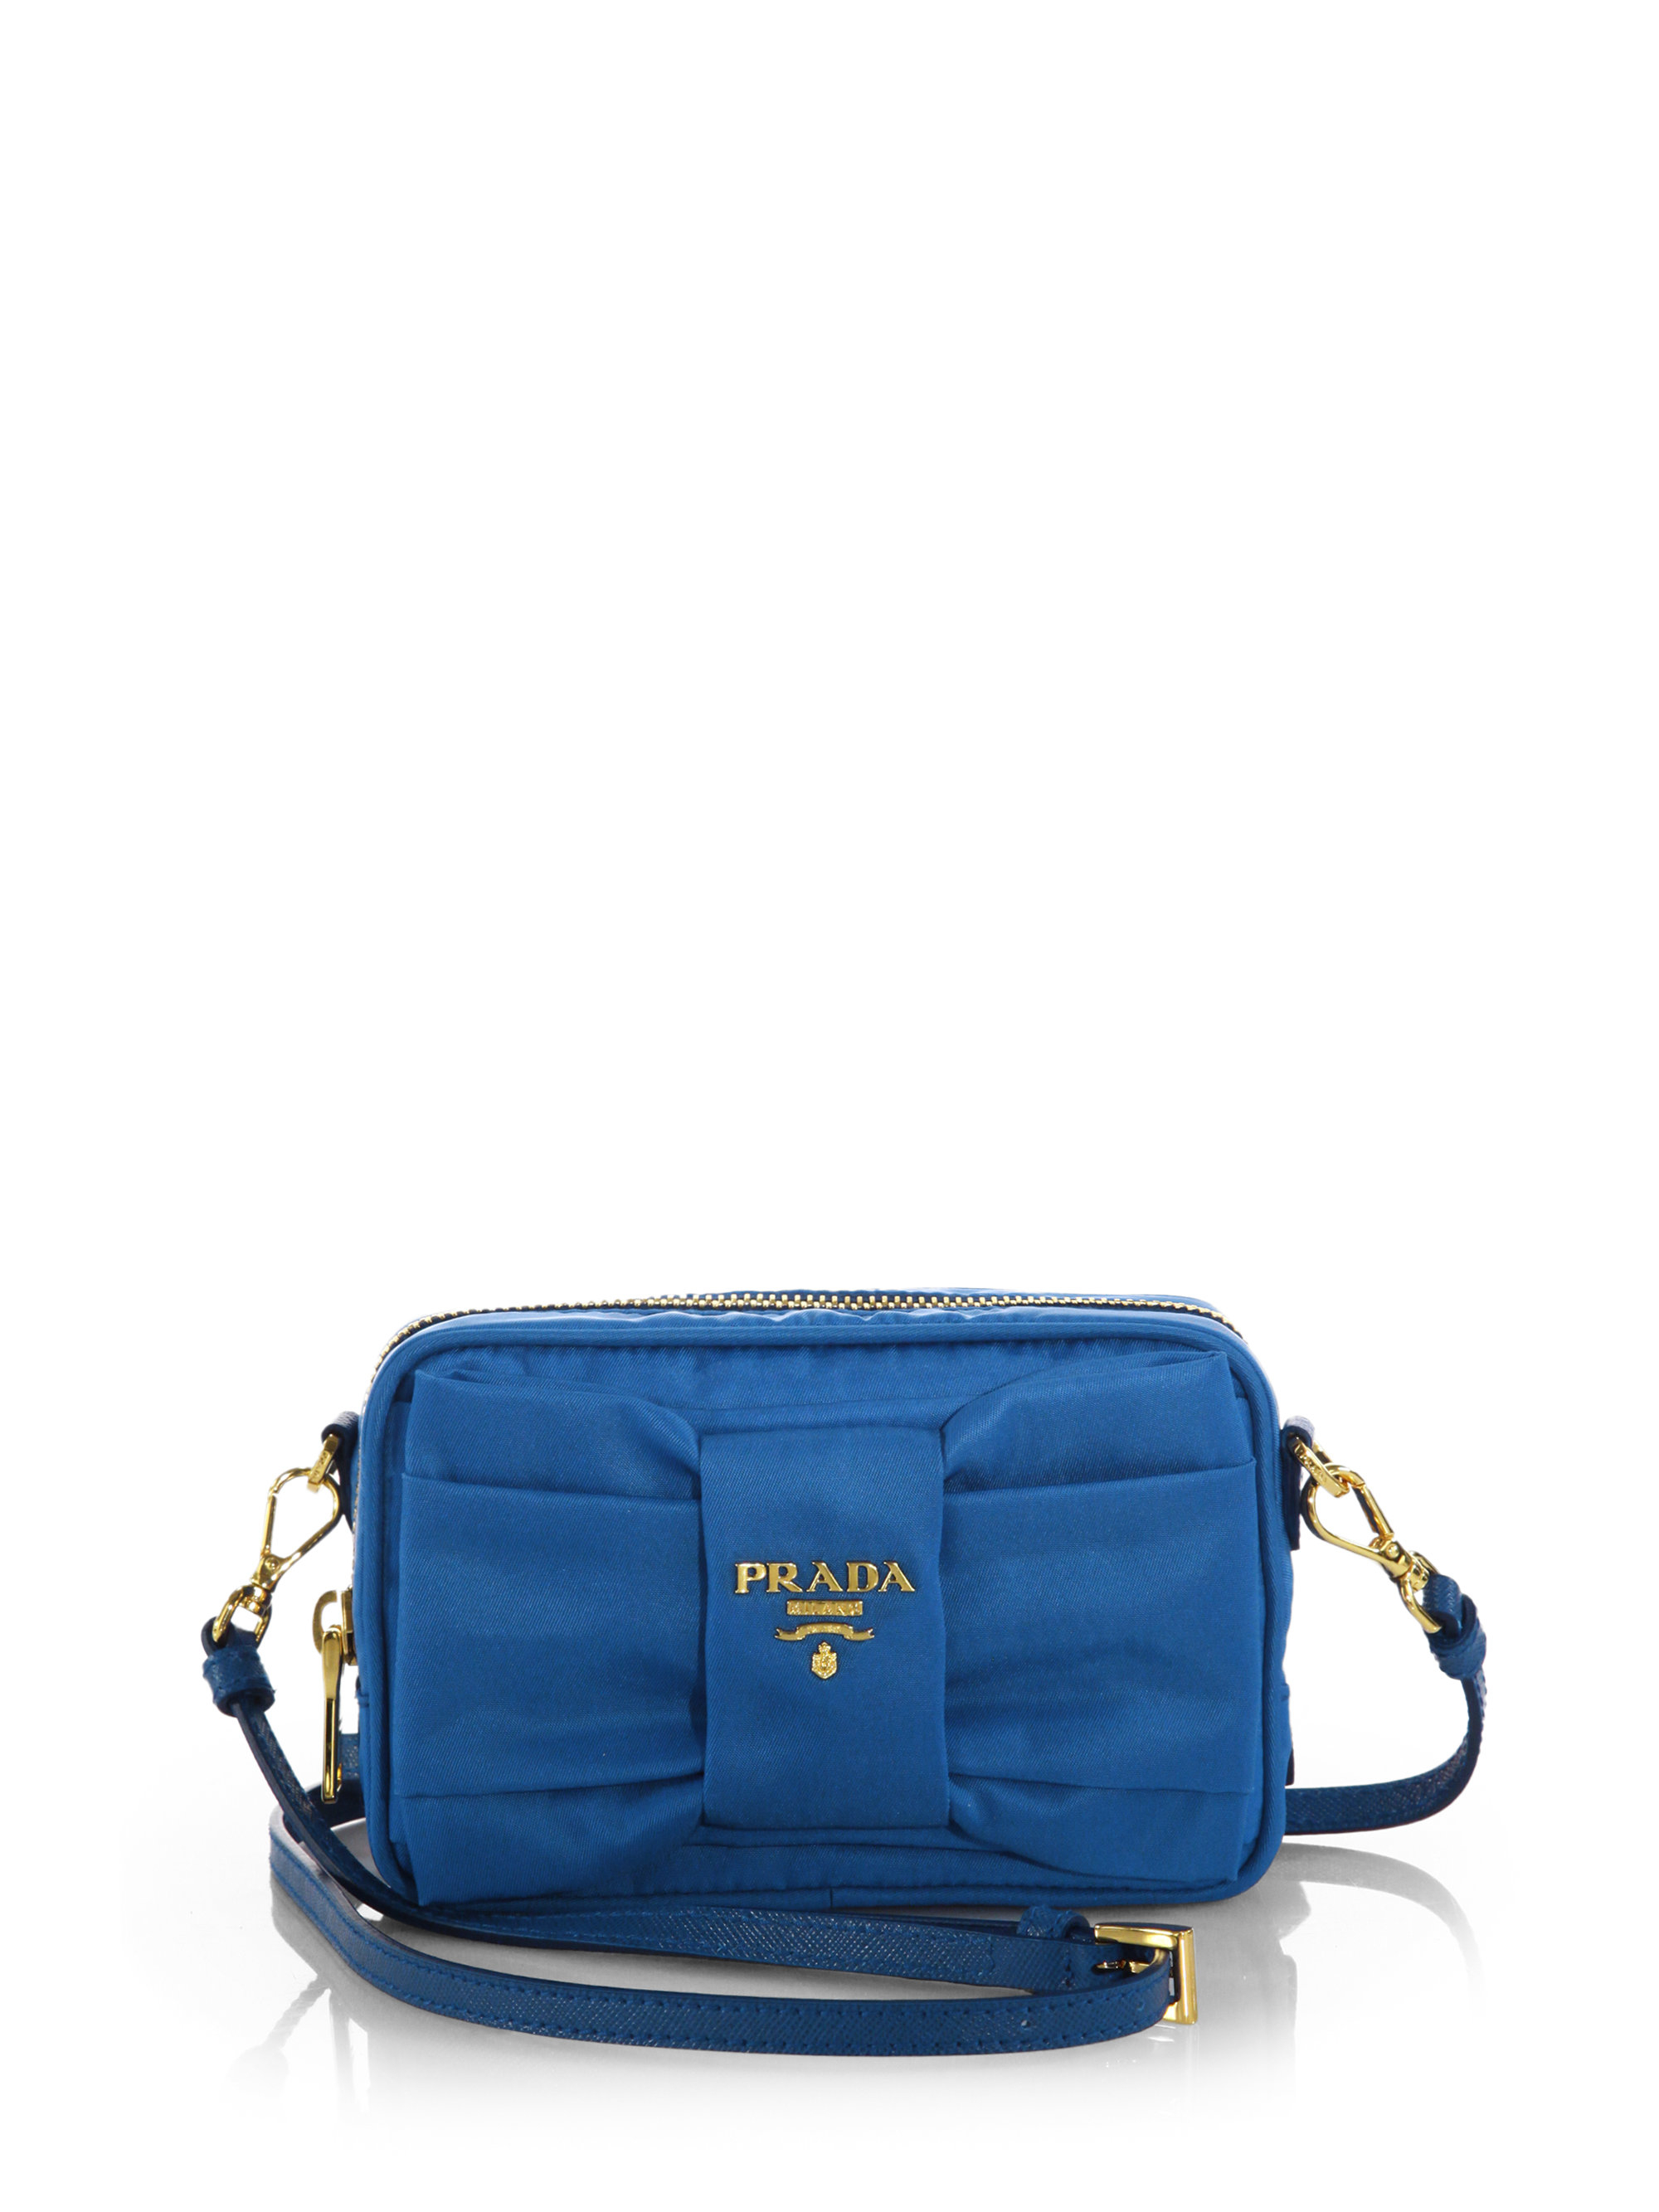 Lyst - Prada Tessuto Nylon Bow Crossbody Bag in Blue